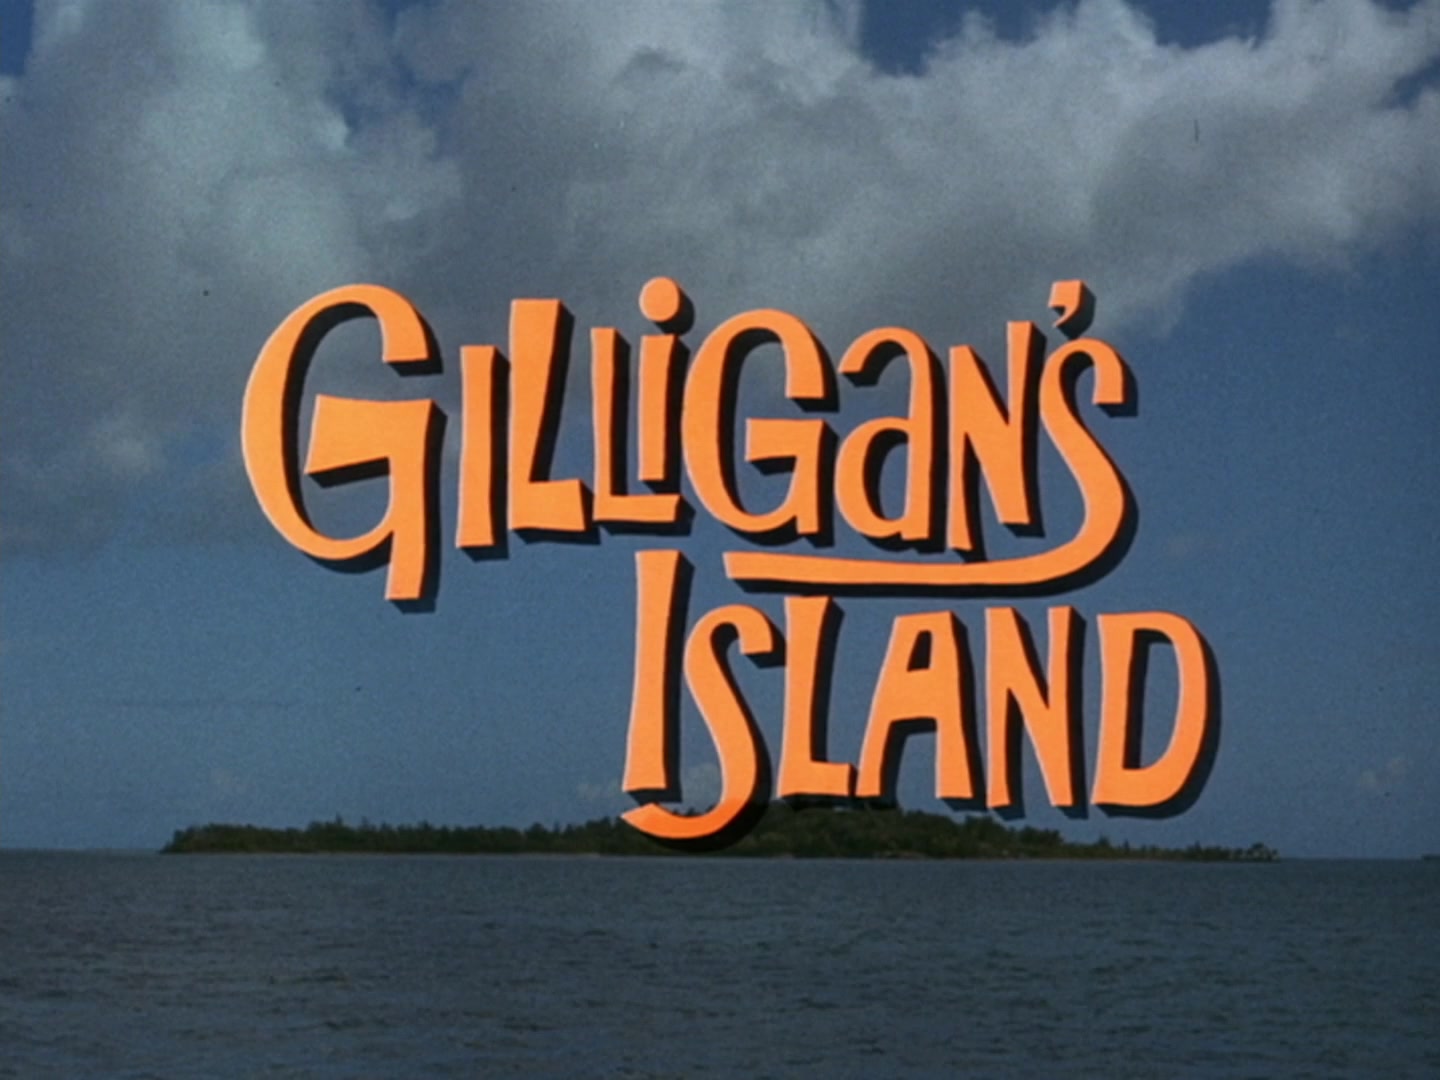 Gilligan's Island Season 2 Image | Fancaps